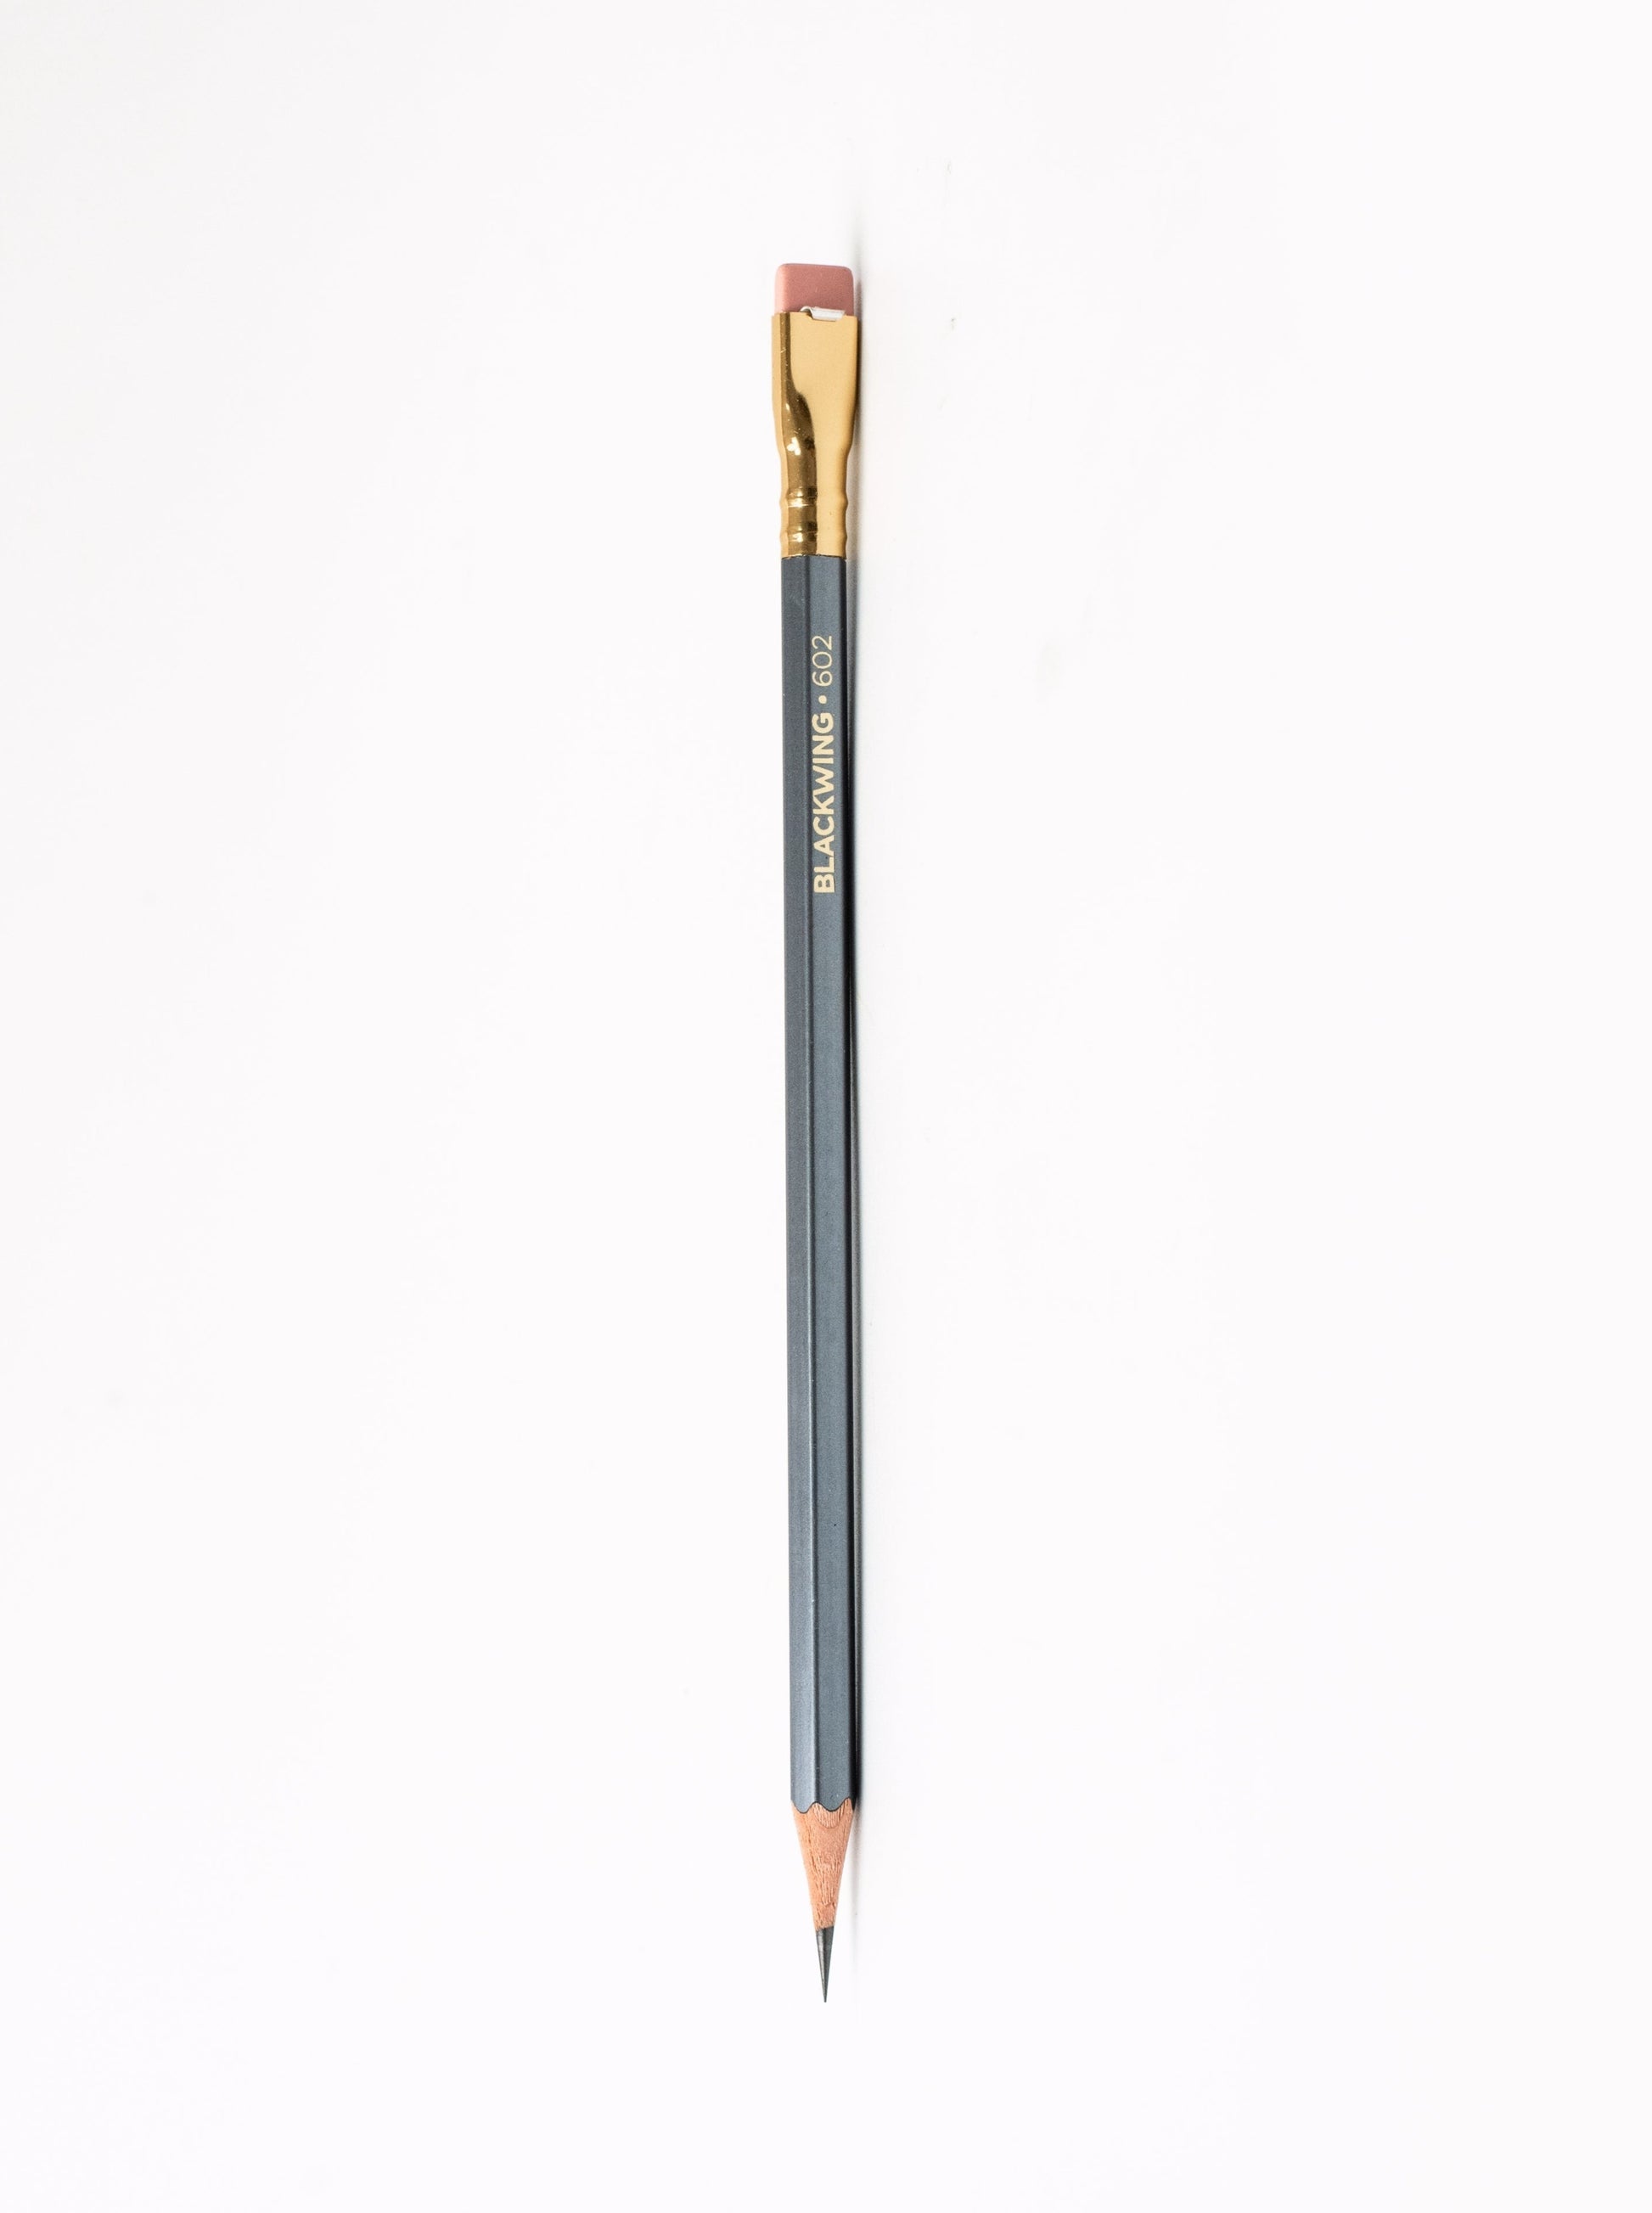 Blackwing 602 Bleistifte - 12 Stück - Otto F. K. Koch